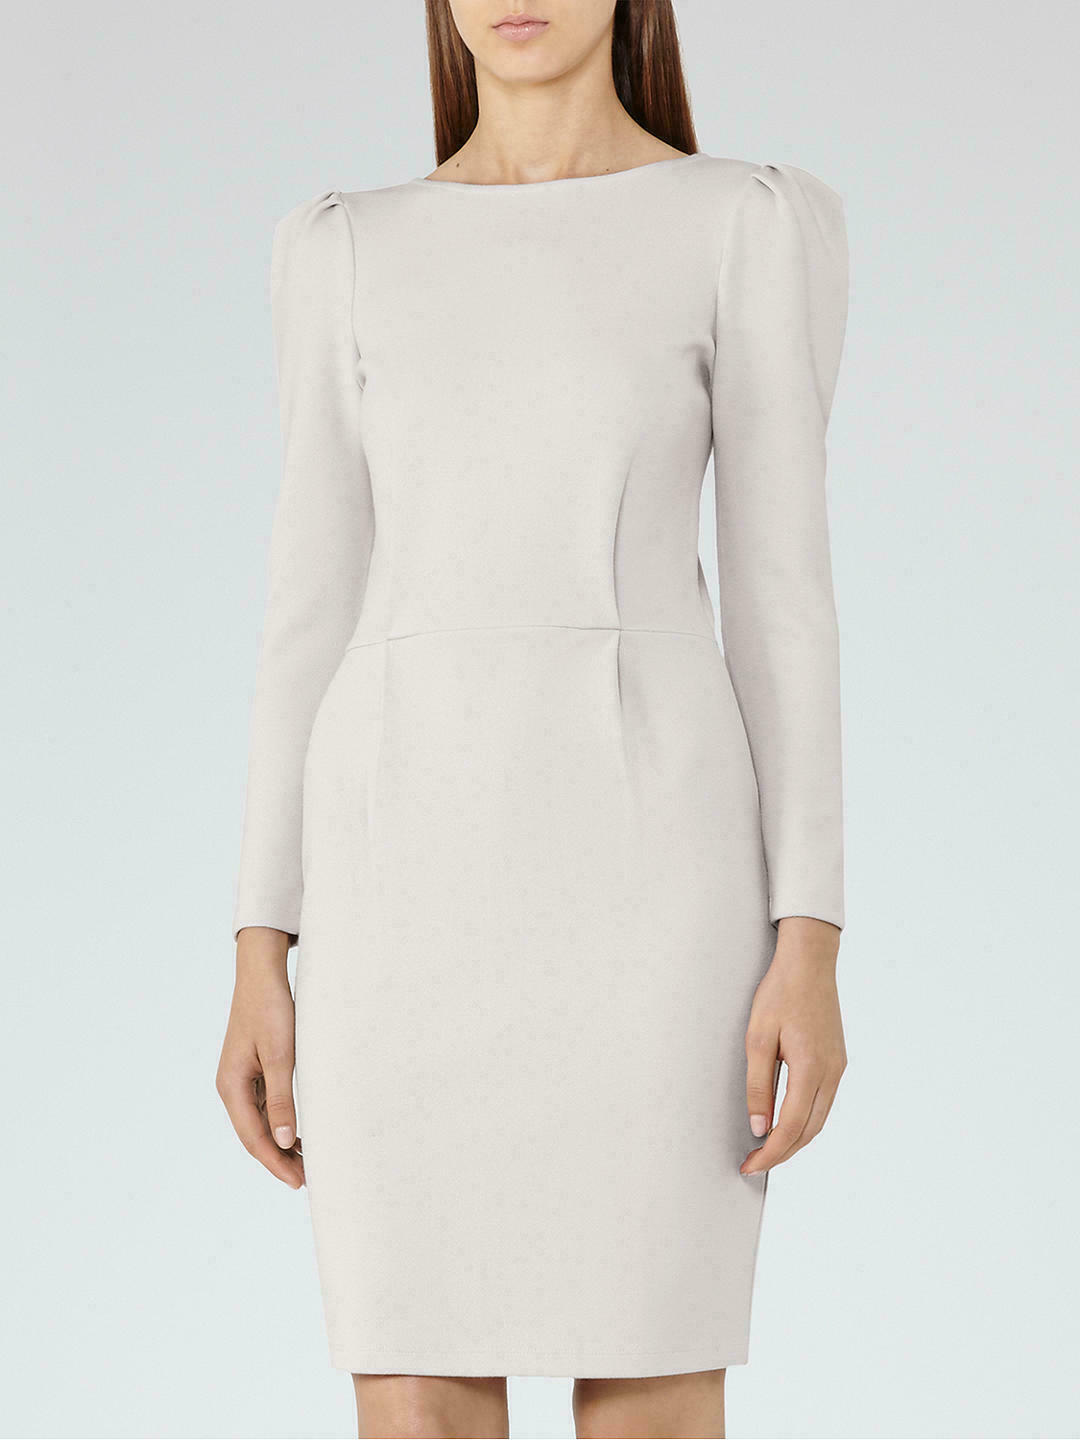 Reiss Ladies Dress 14 Nessa Puff Sleeves Smart Work Occasion Winter Easy to Wear